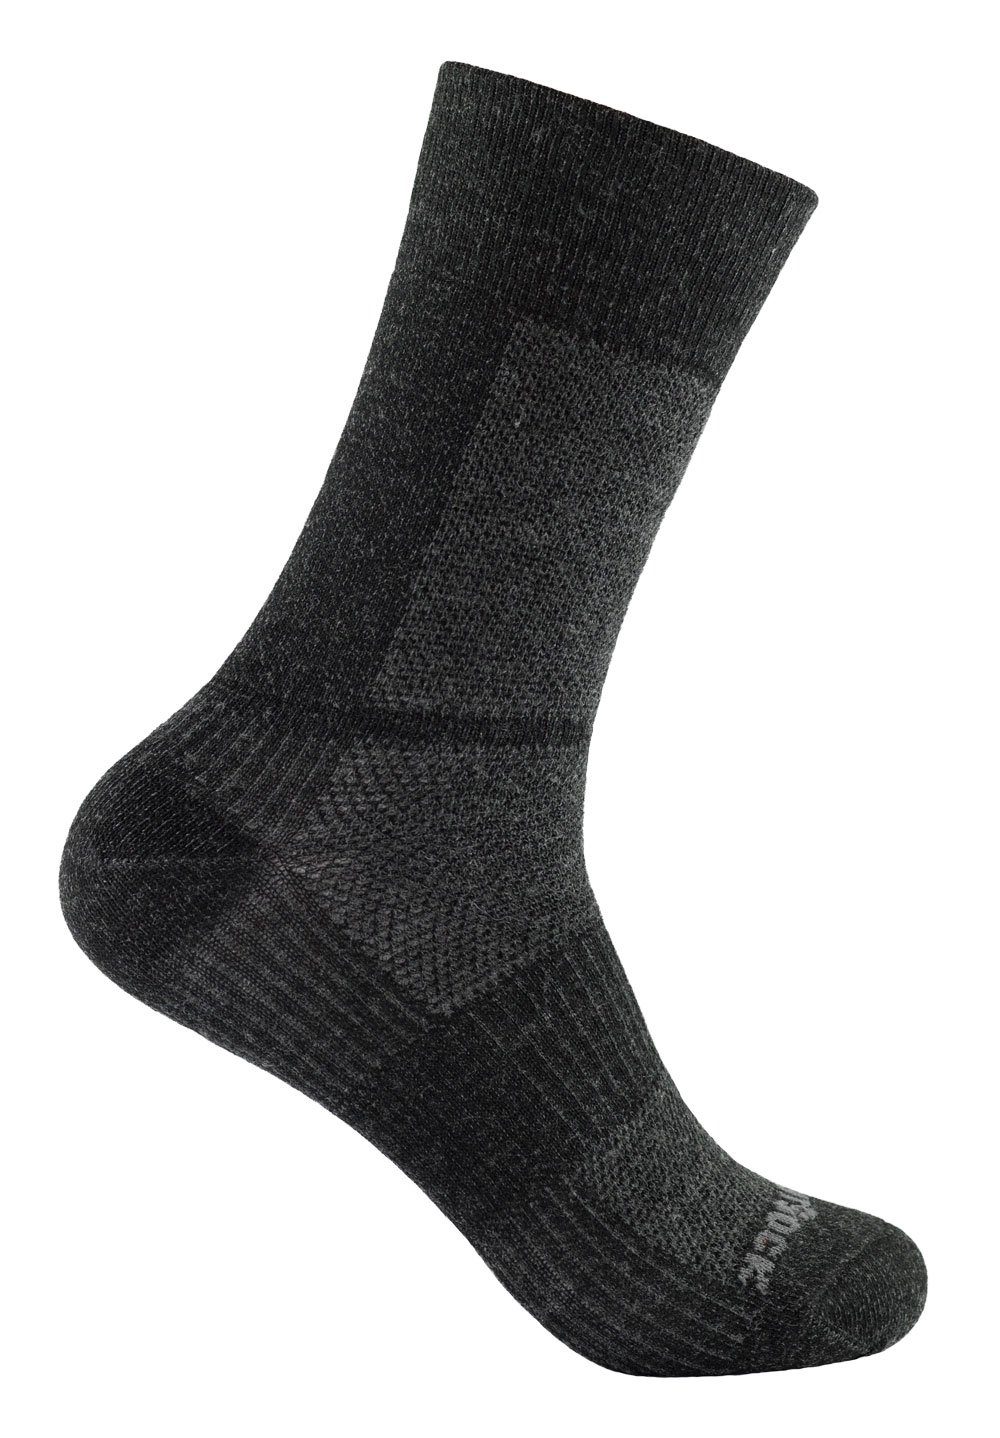 Wrightsock Socken »Coolmesh II Merino Crew Grey-Black« online kaufen | OTTO